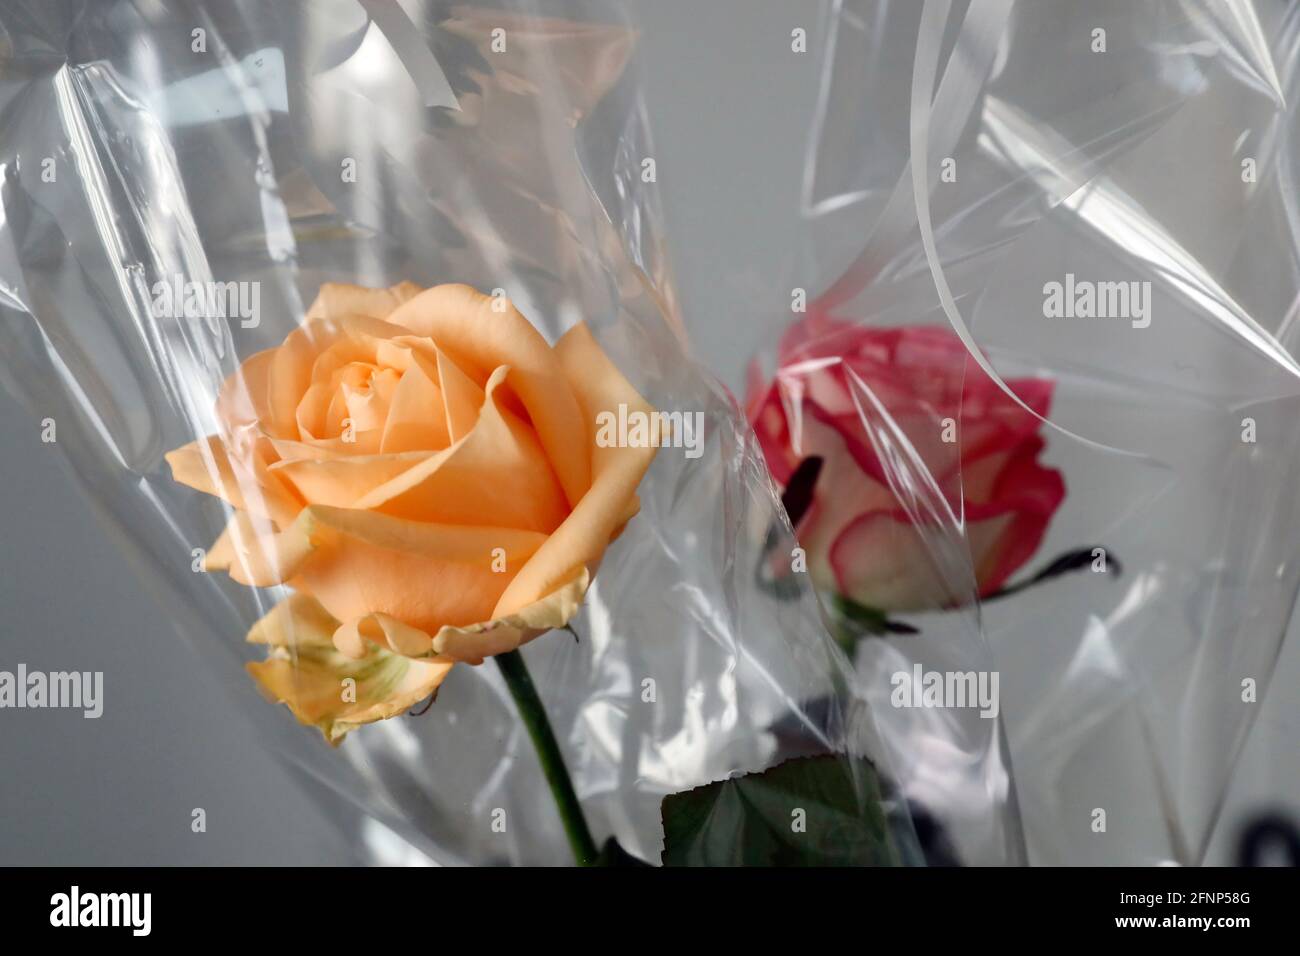 Deux roses en cellophane. France. Banque D'Images